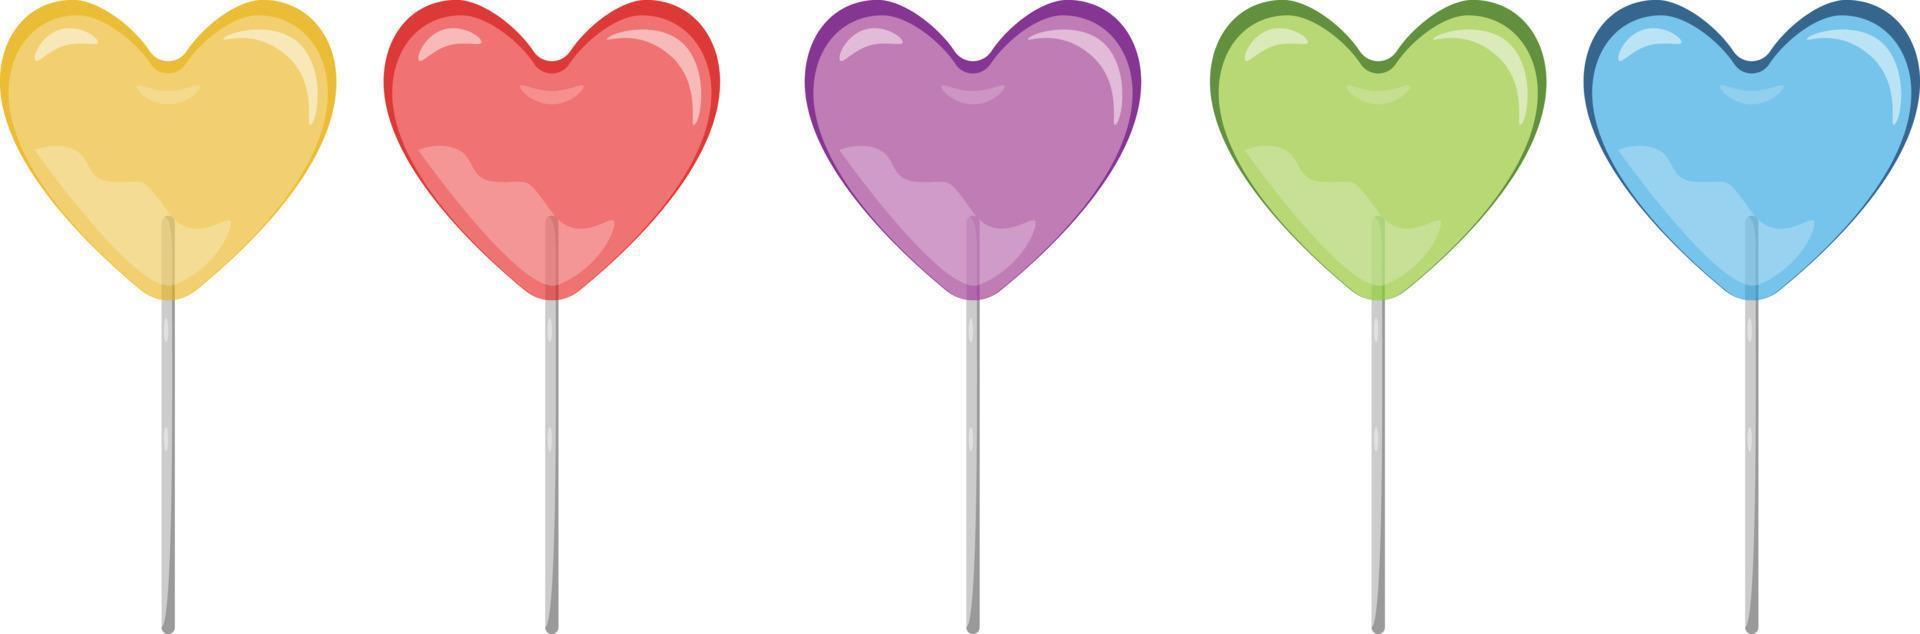 Heart Shape Lolipop Love Candy Illustration vector